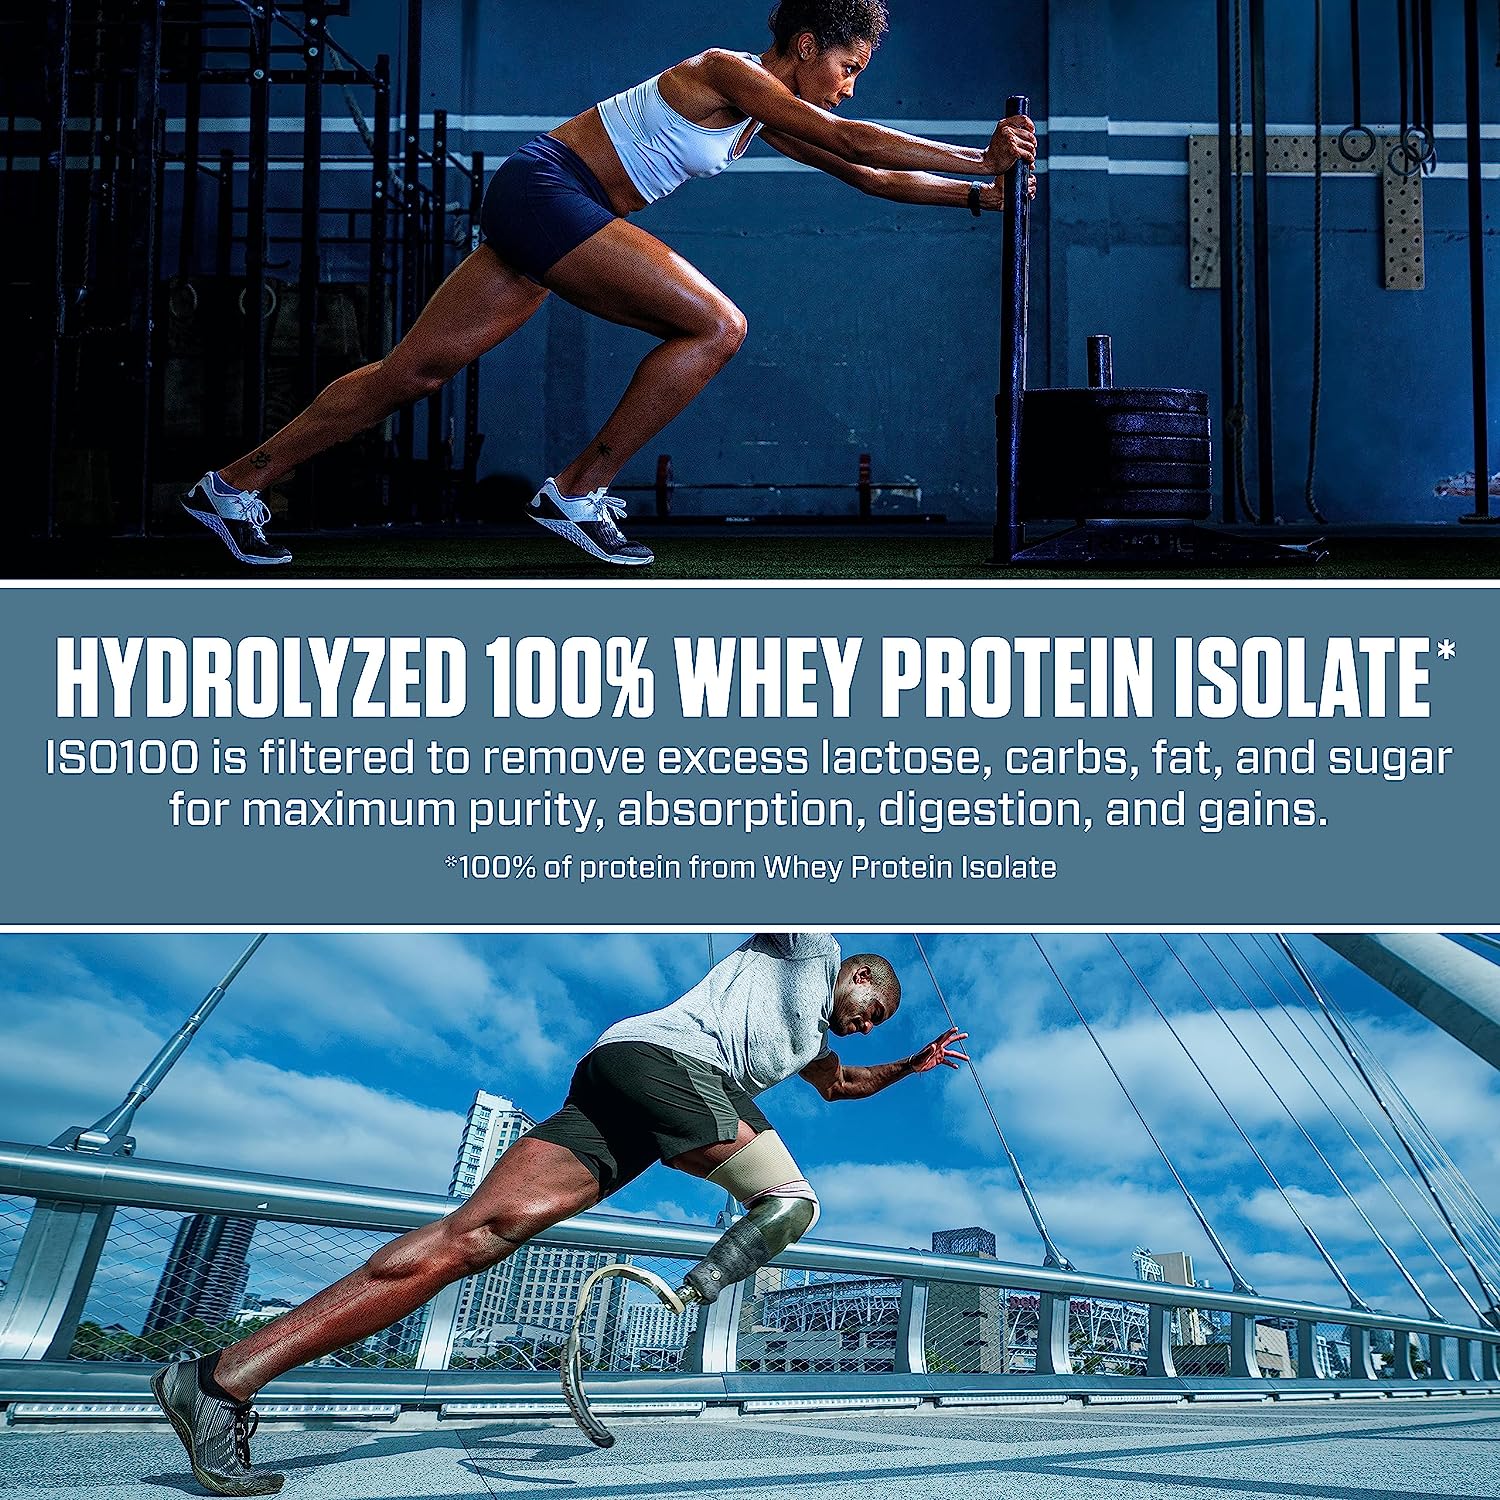 Dymatize ISO100 Hydrolyzed Protein Powder, 100% Whey Isolate, 25g of P